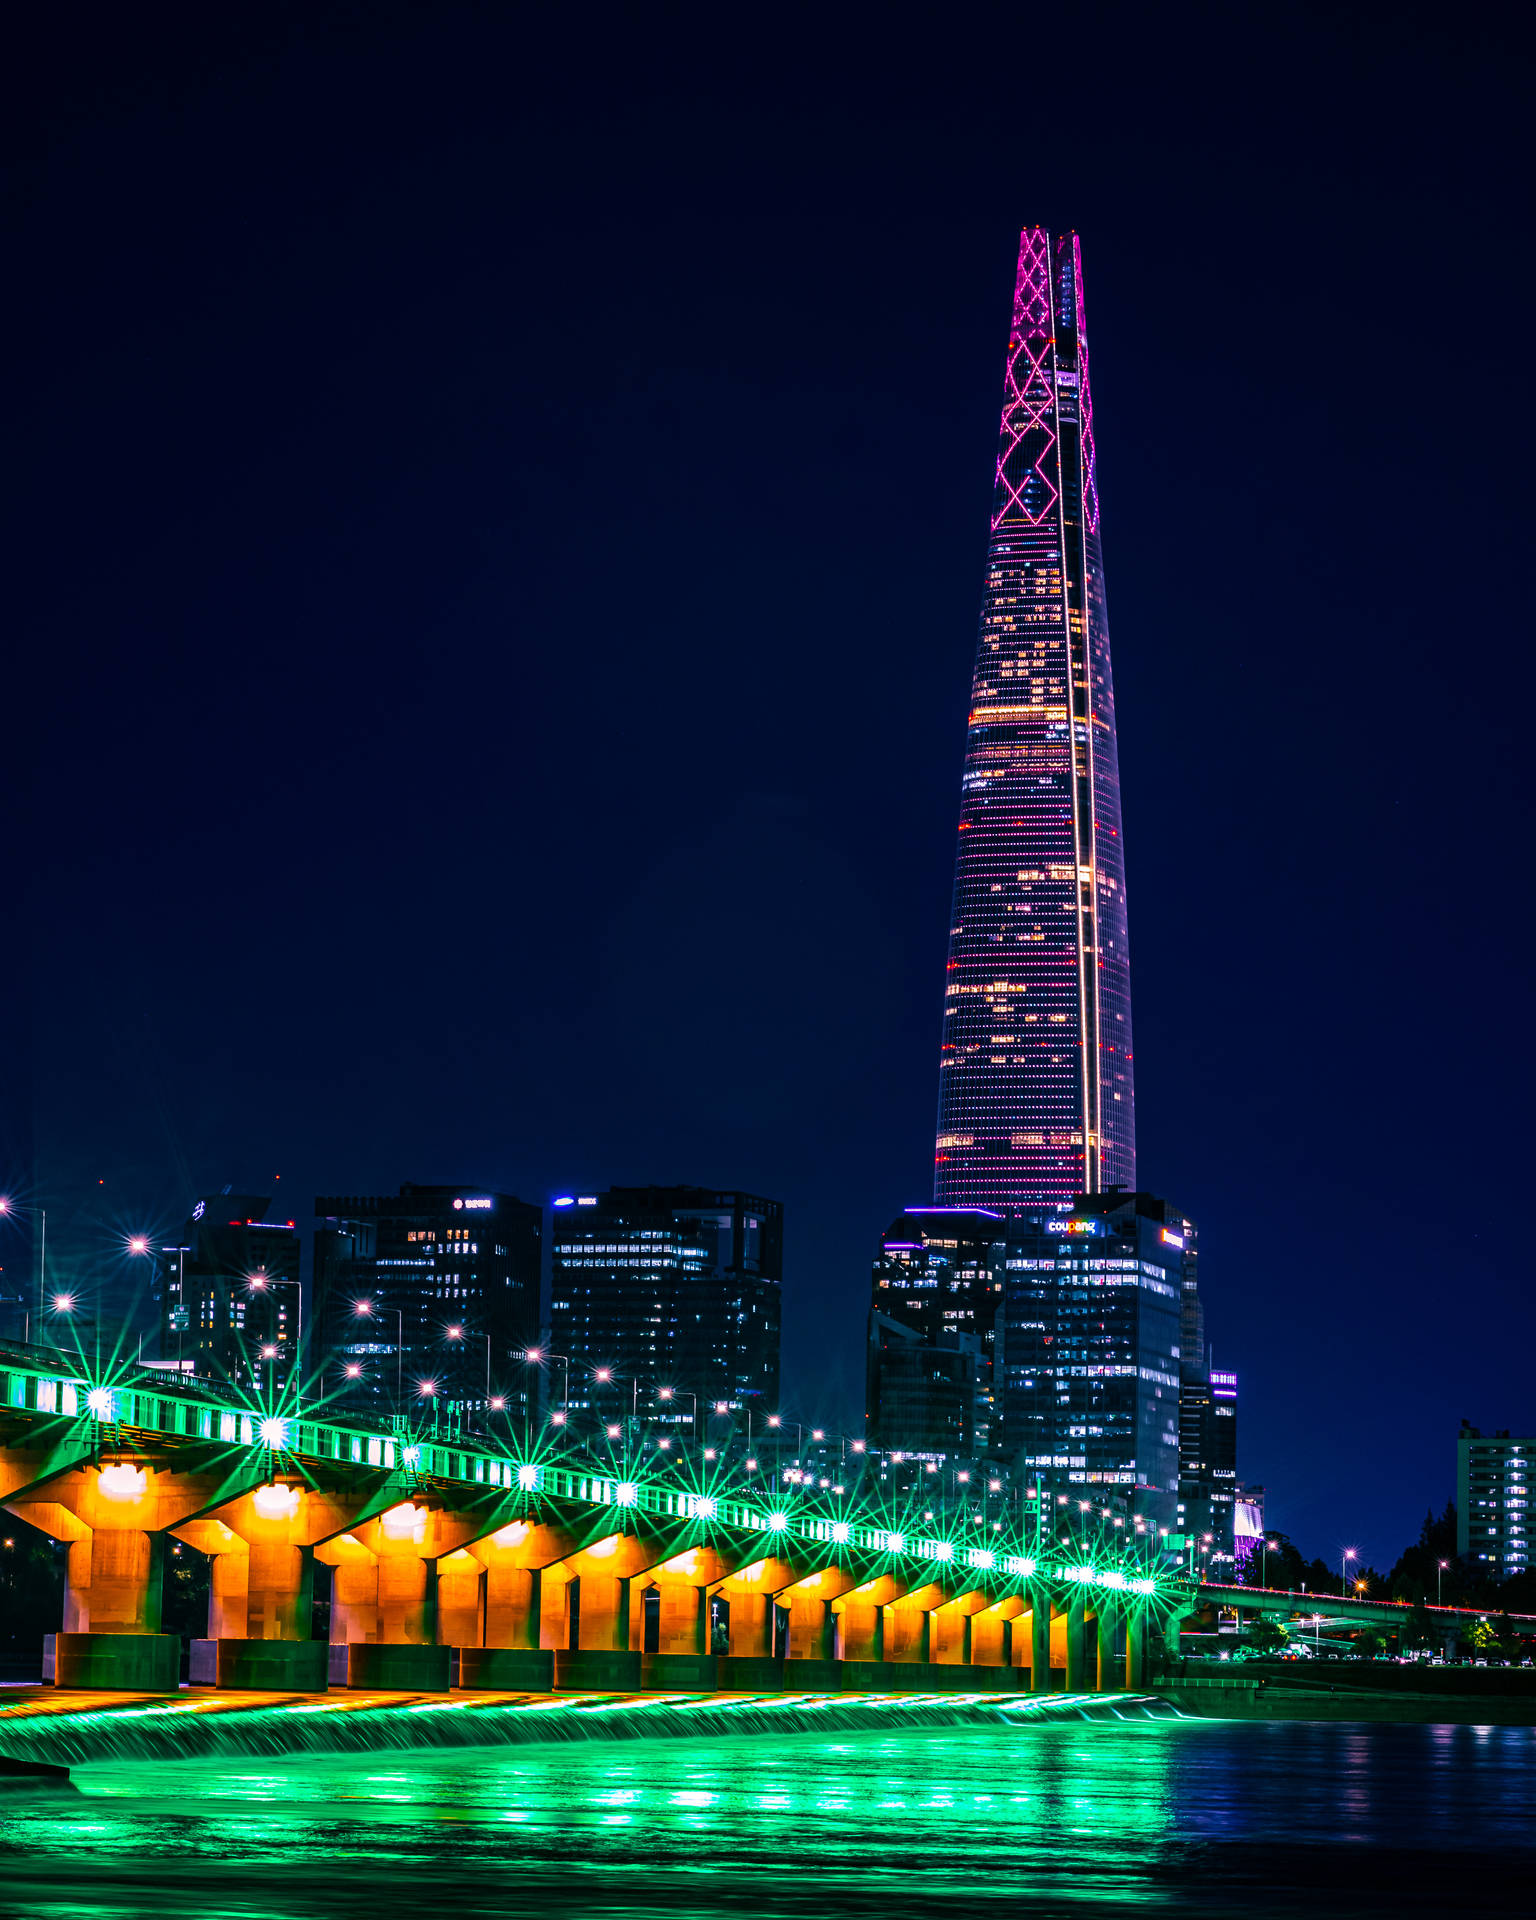 Seoul Lotte World Tower